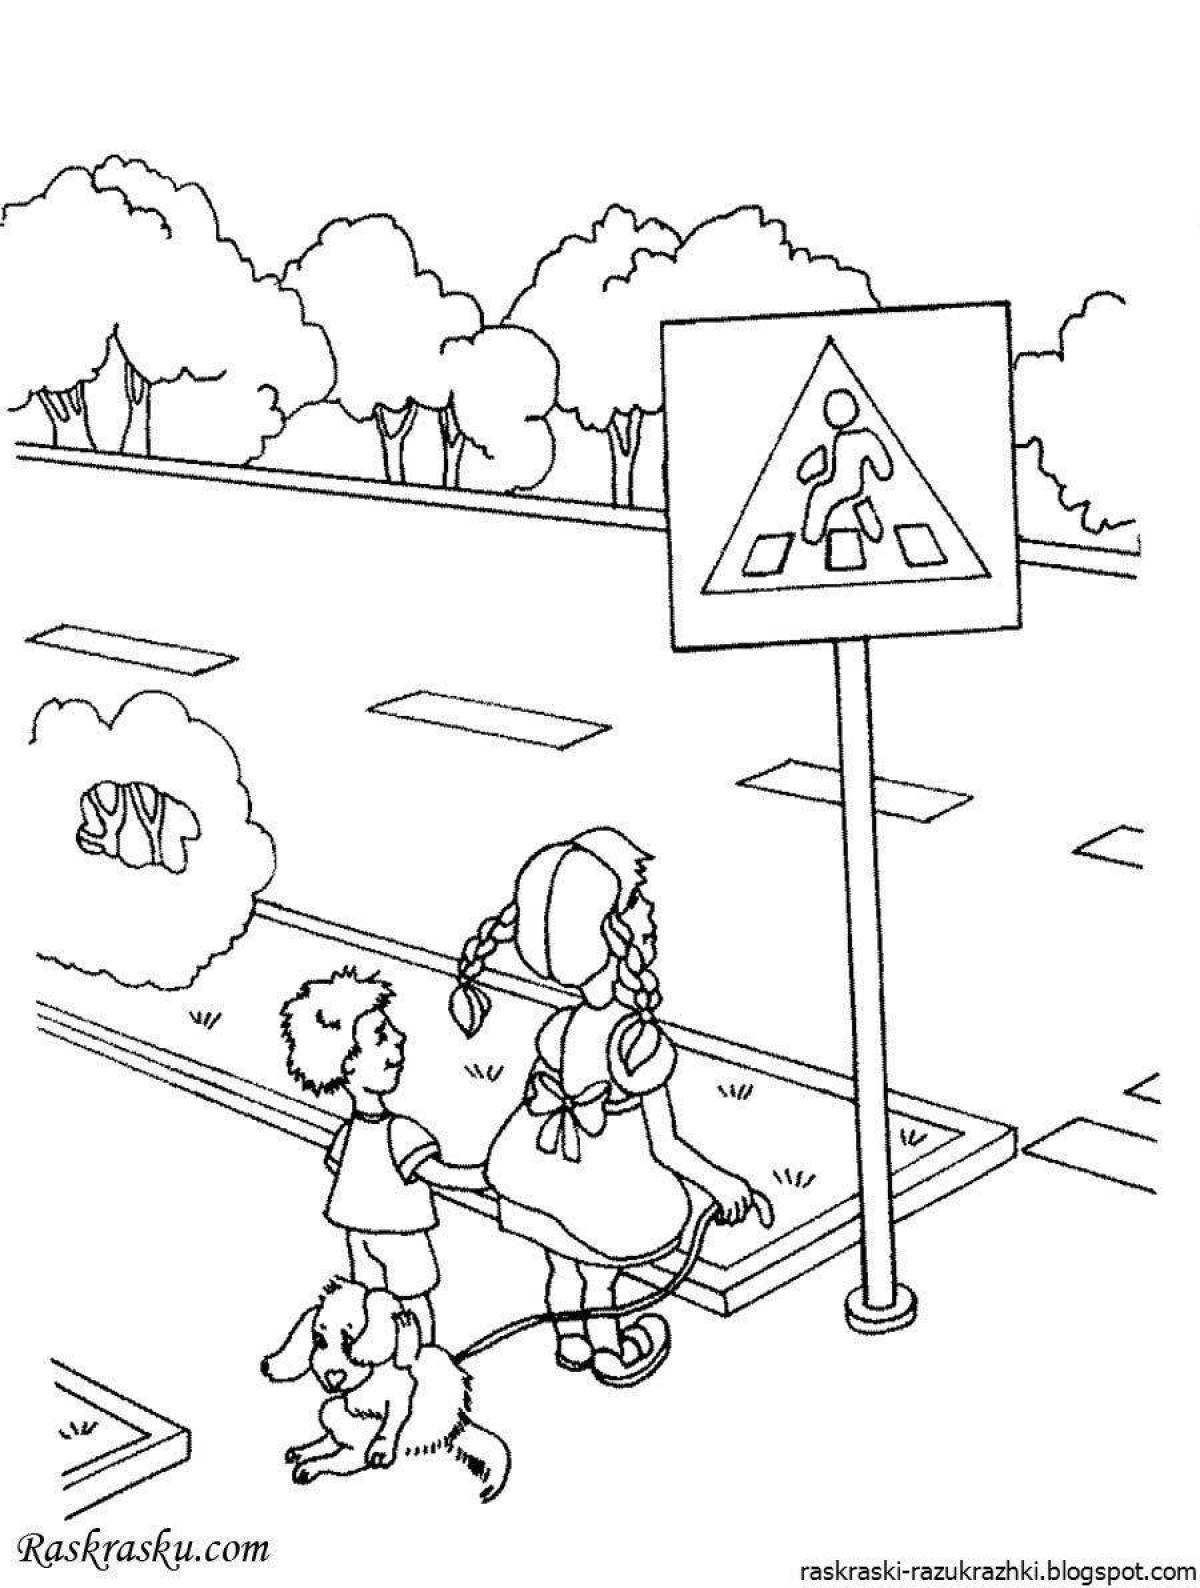 Traffic rules for preschool children #9